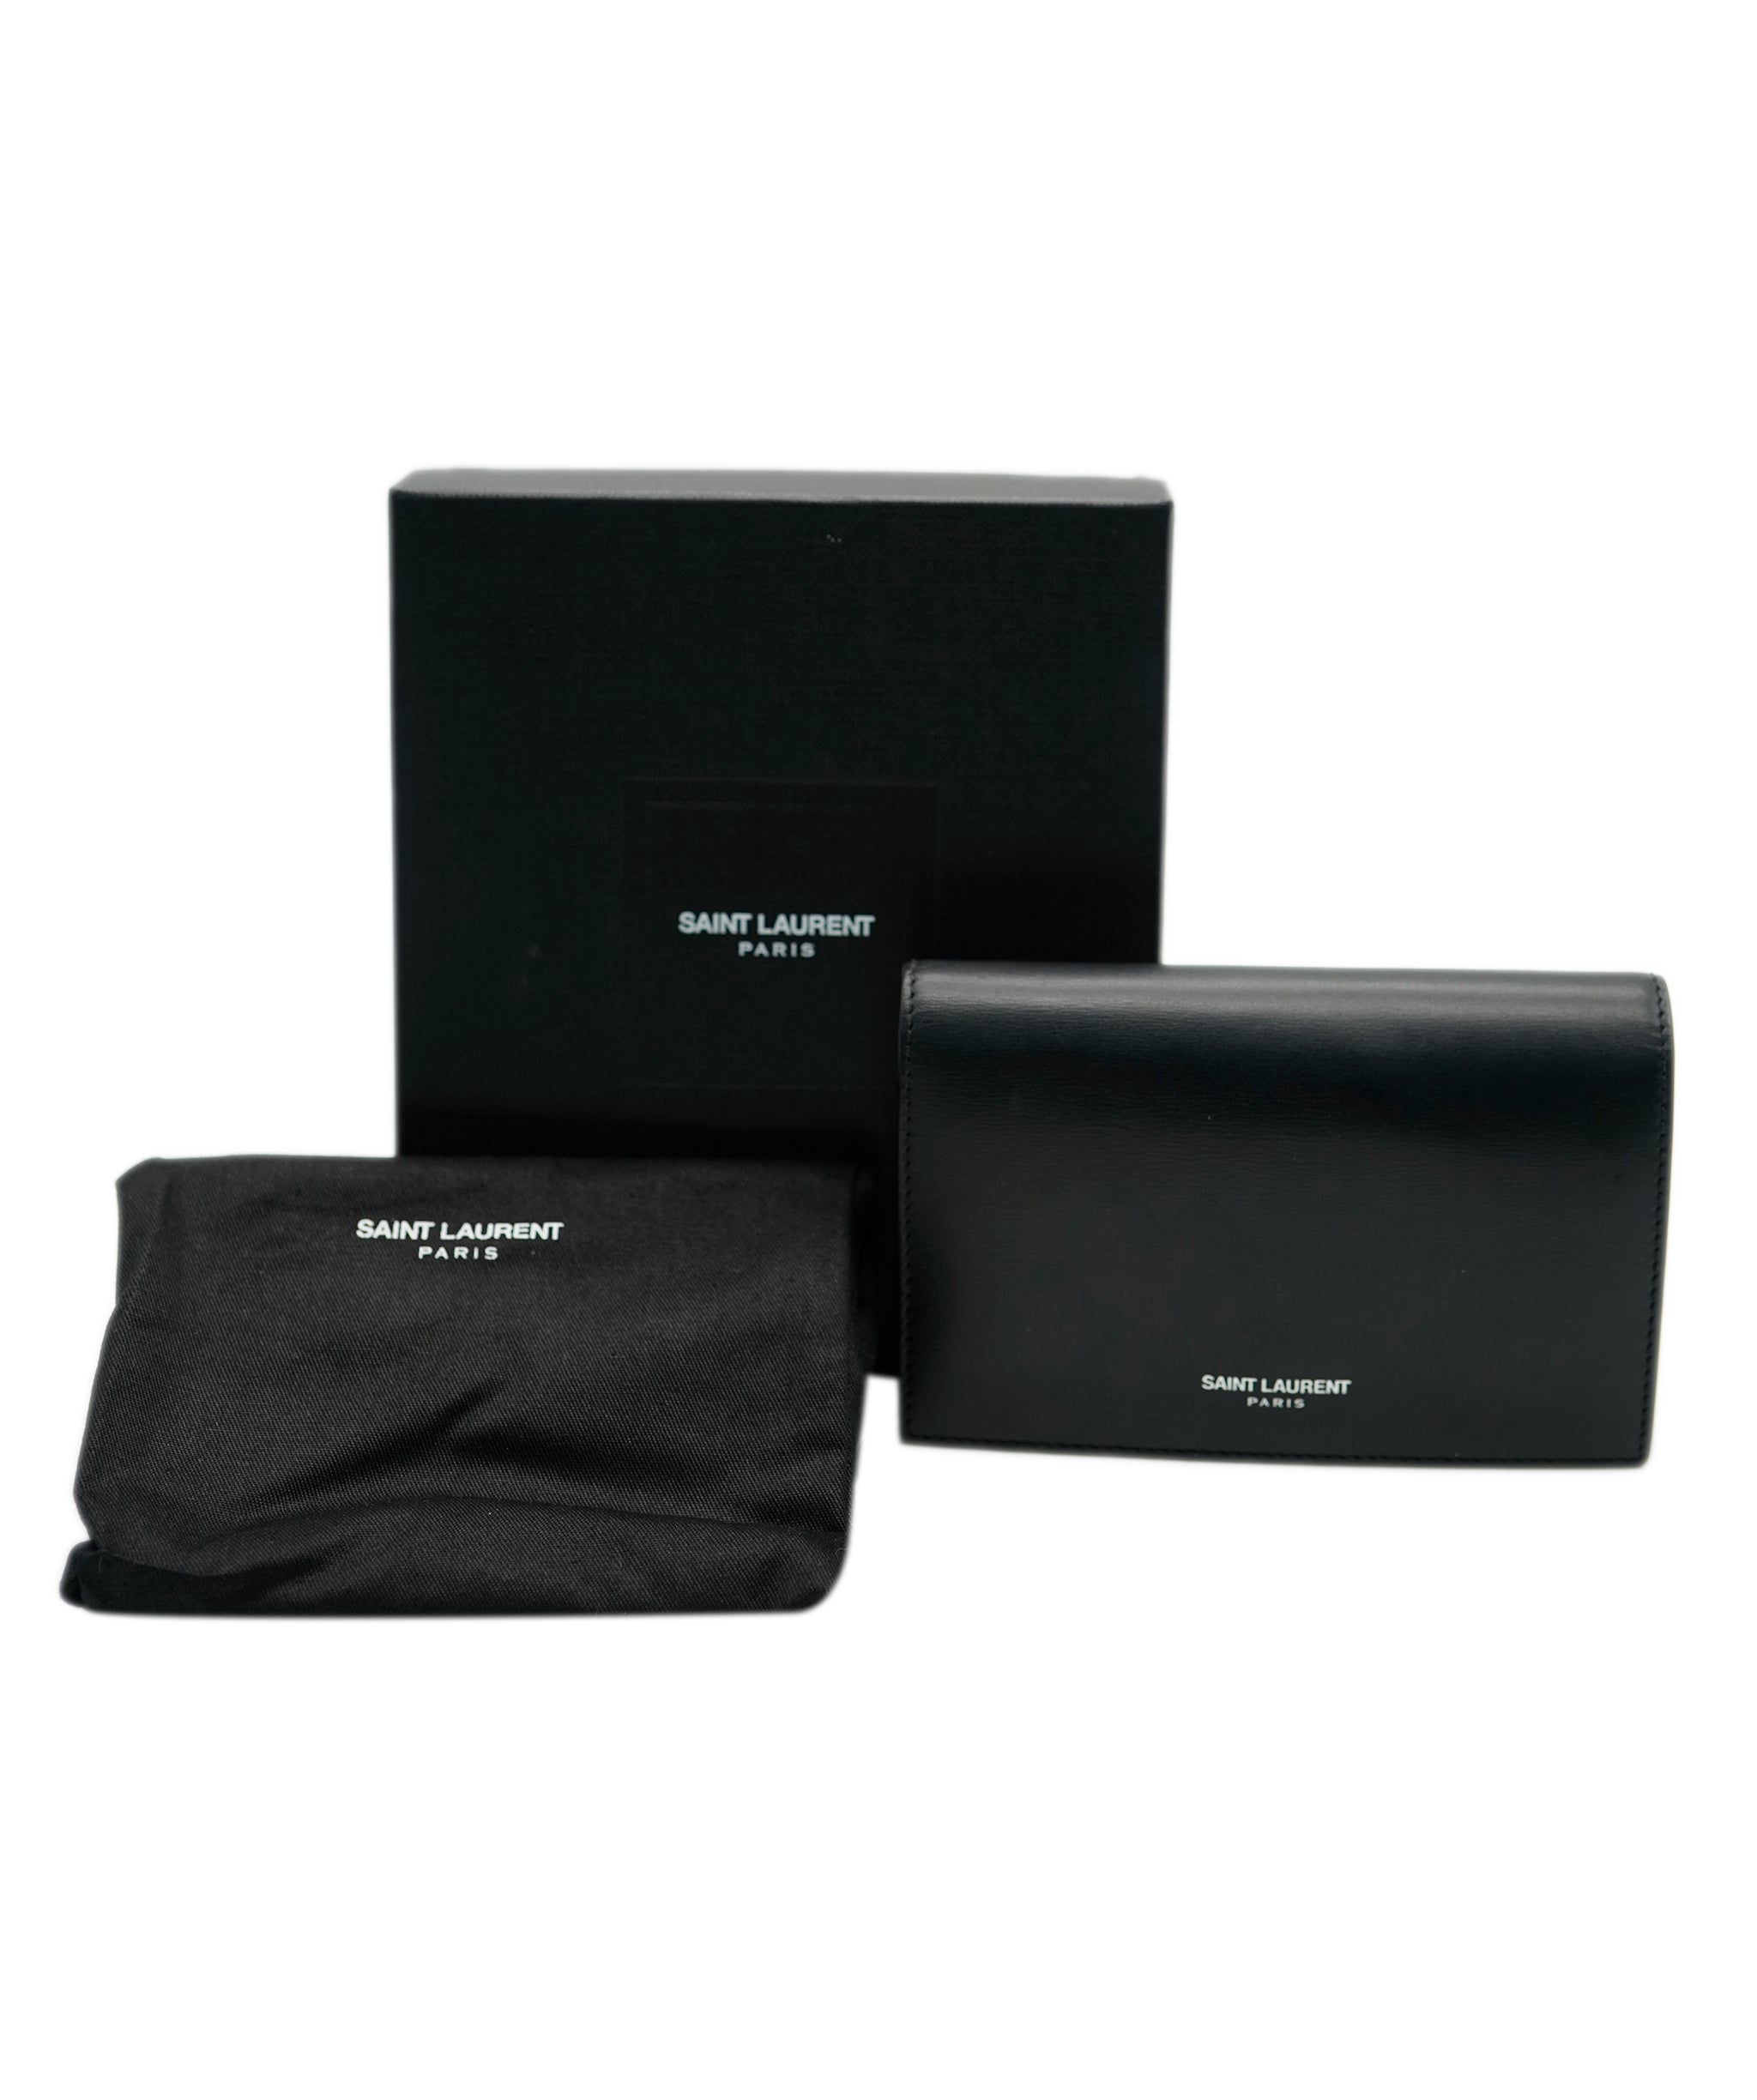 Yves Saint Laurent YSL black smooth leather cardholder / wallet - AJC0480